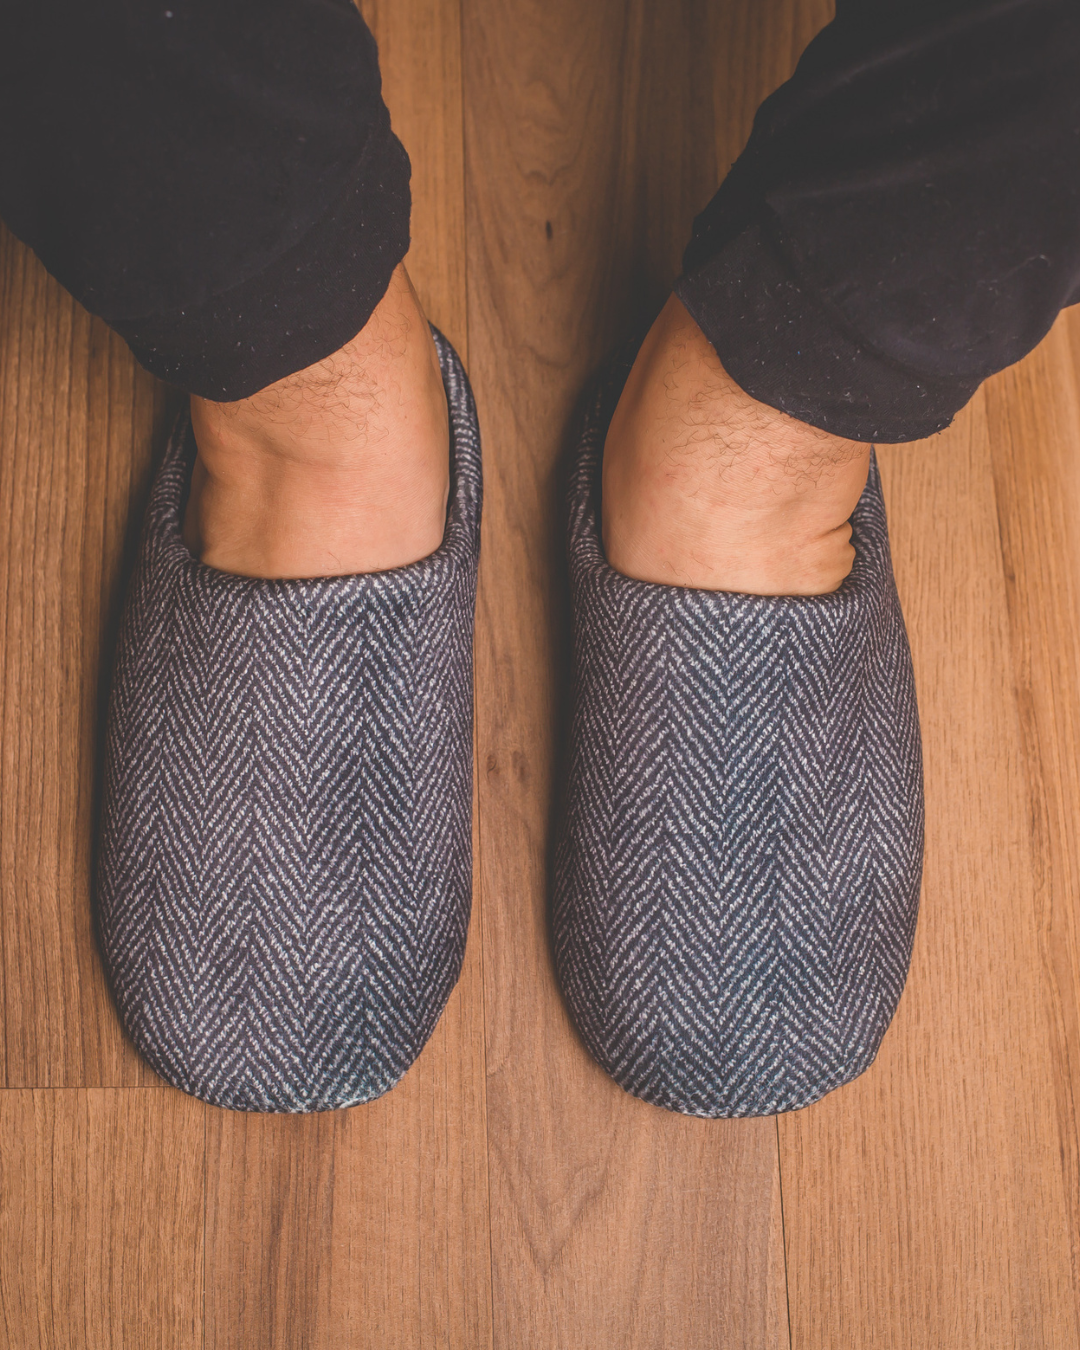 Classy men's slippers